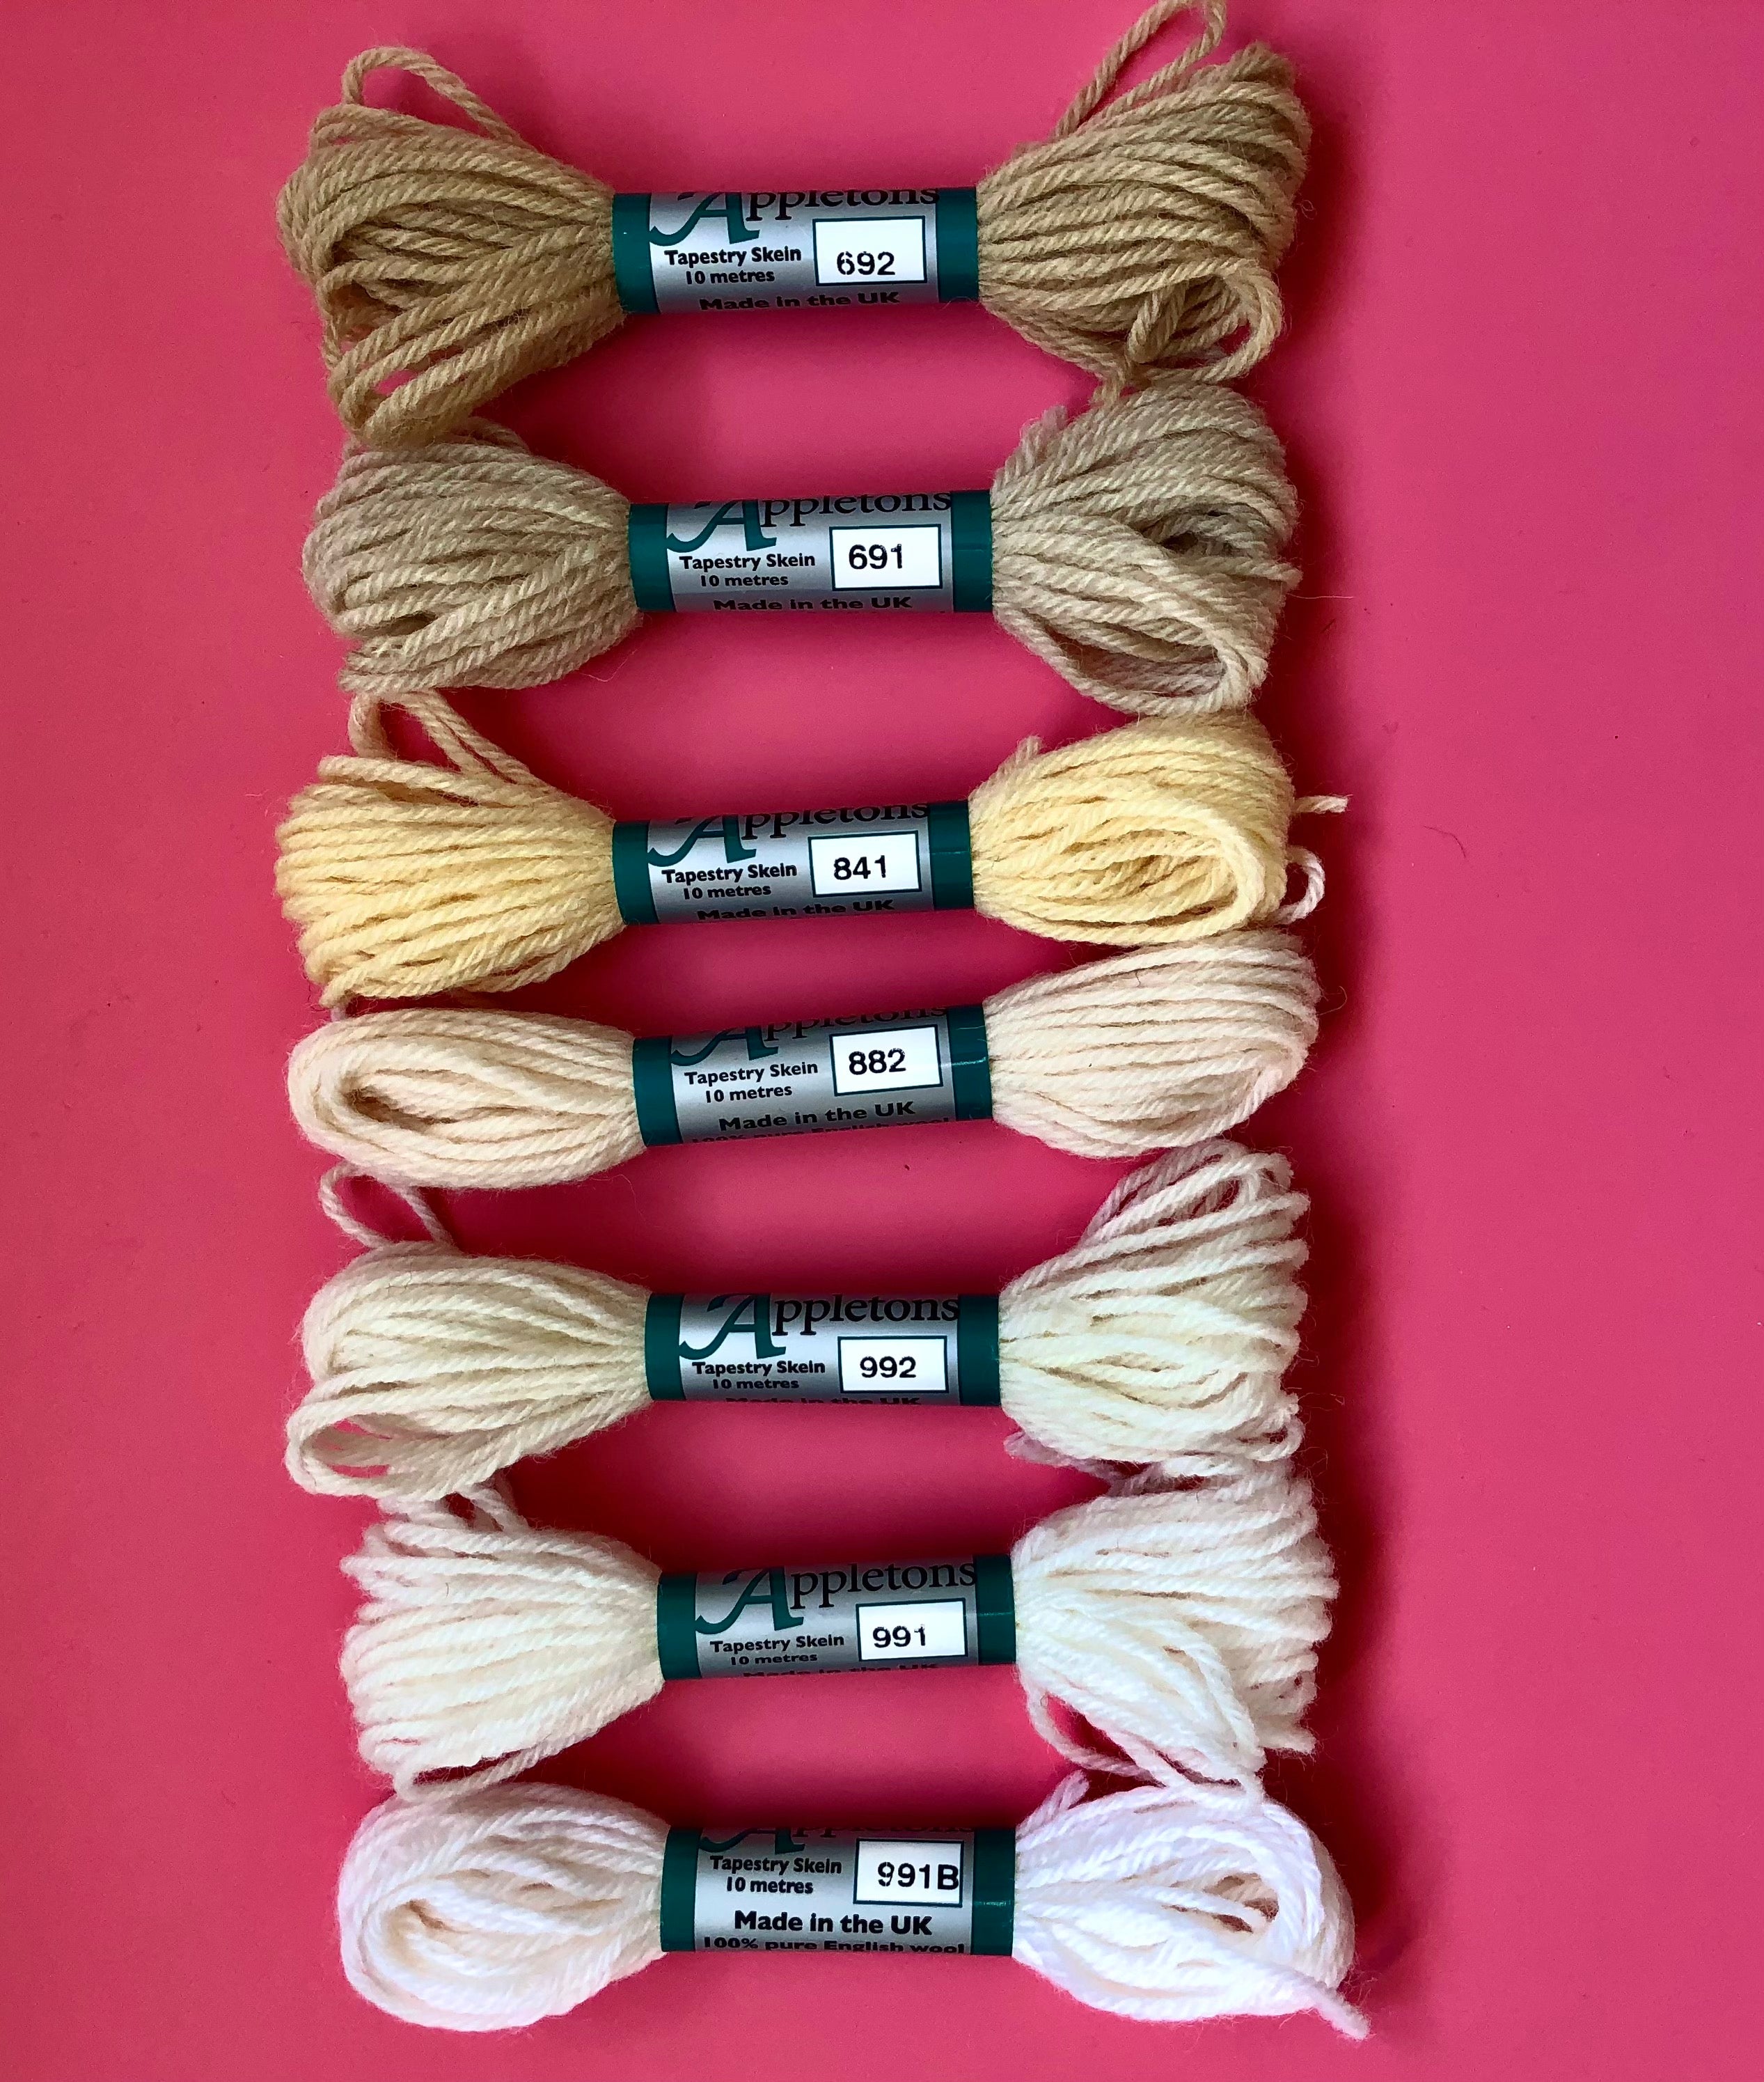 Appletons Tapestry Wool - Neutrals/Whites